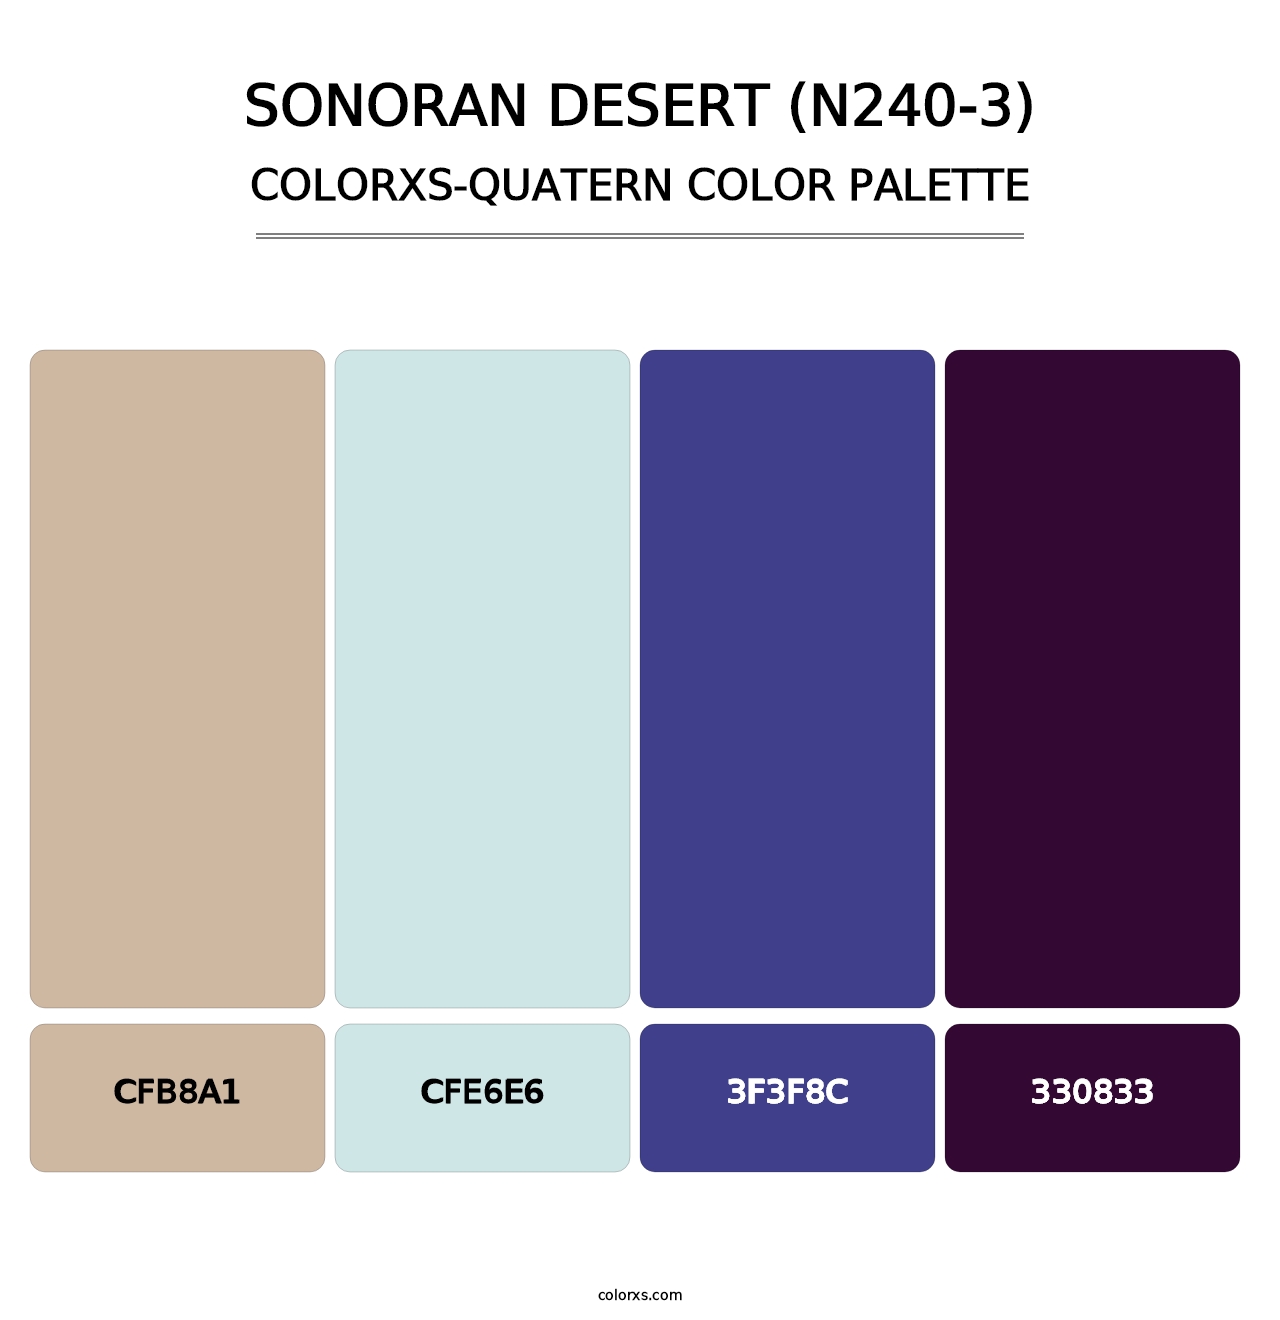 Sonoran Desert (N240-3) - Colorxs Quatern Palette